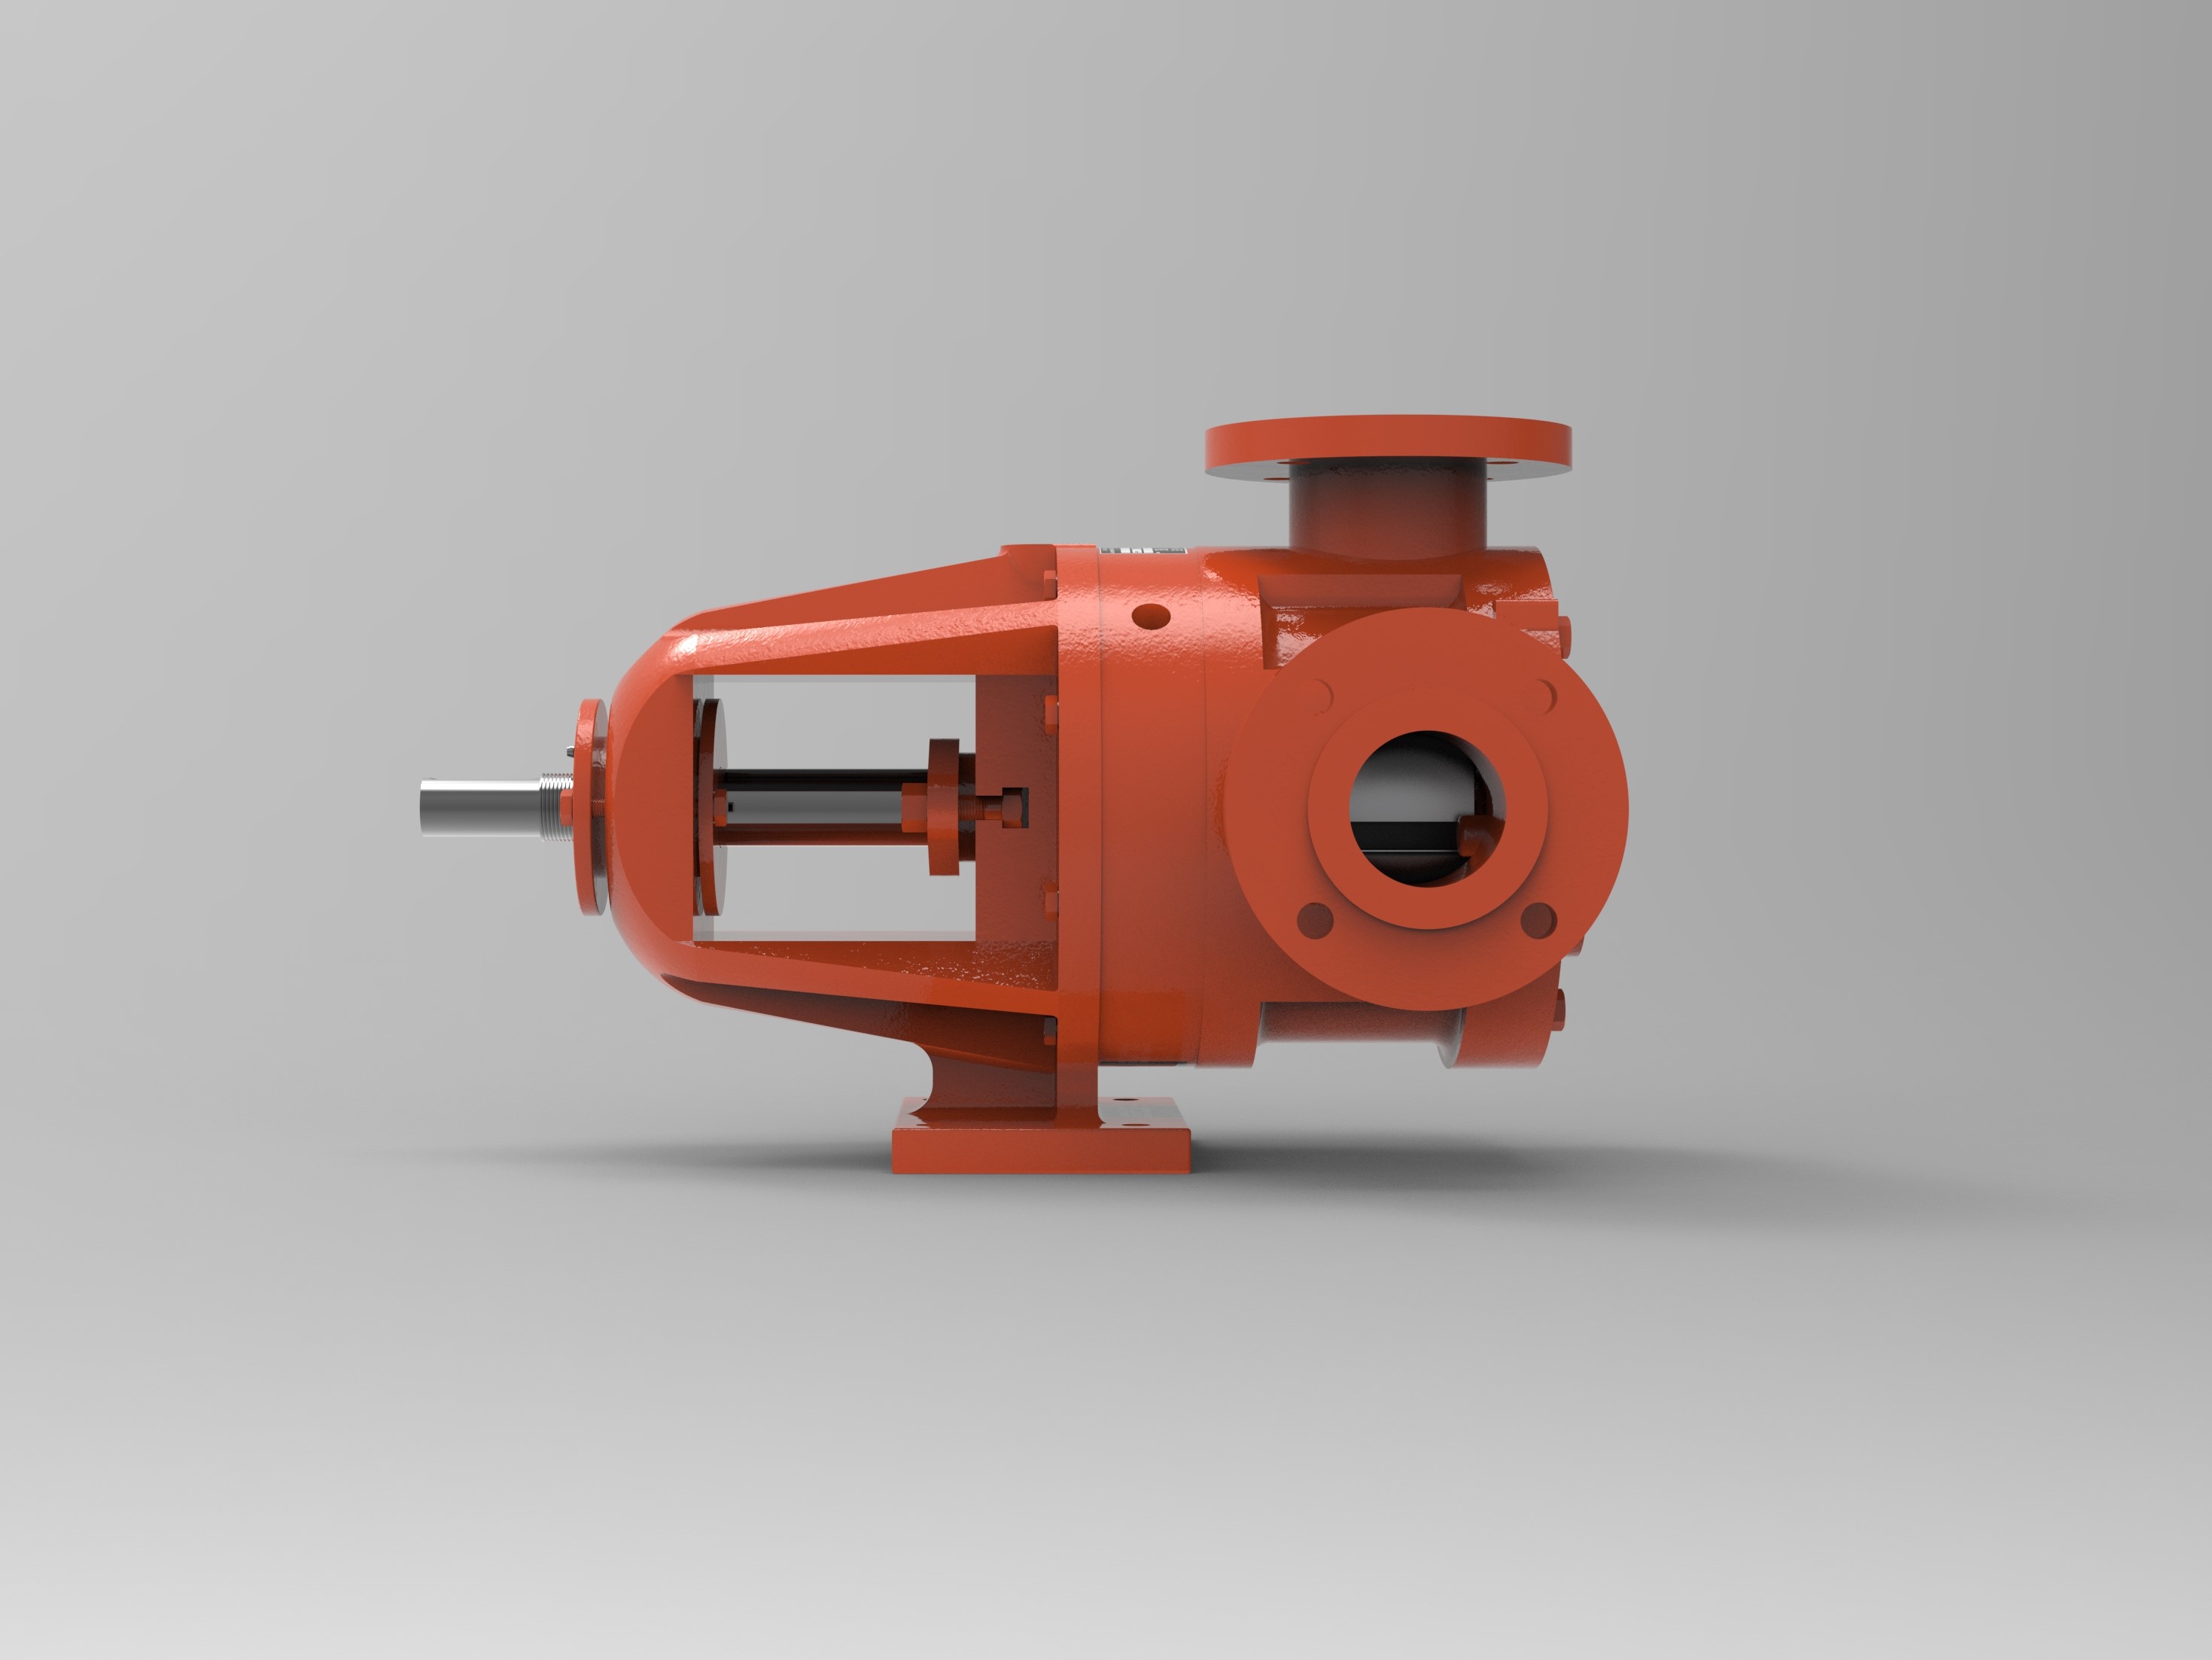 KIP2½” Internal Gear Pumps - Kupar Pump - Gear Pump, Gear Transfer 